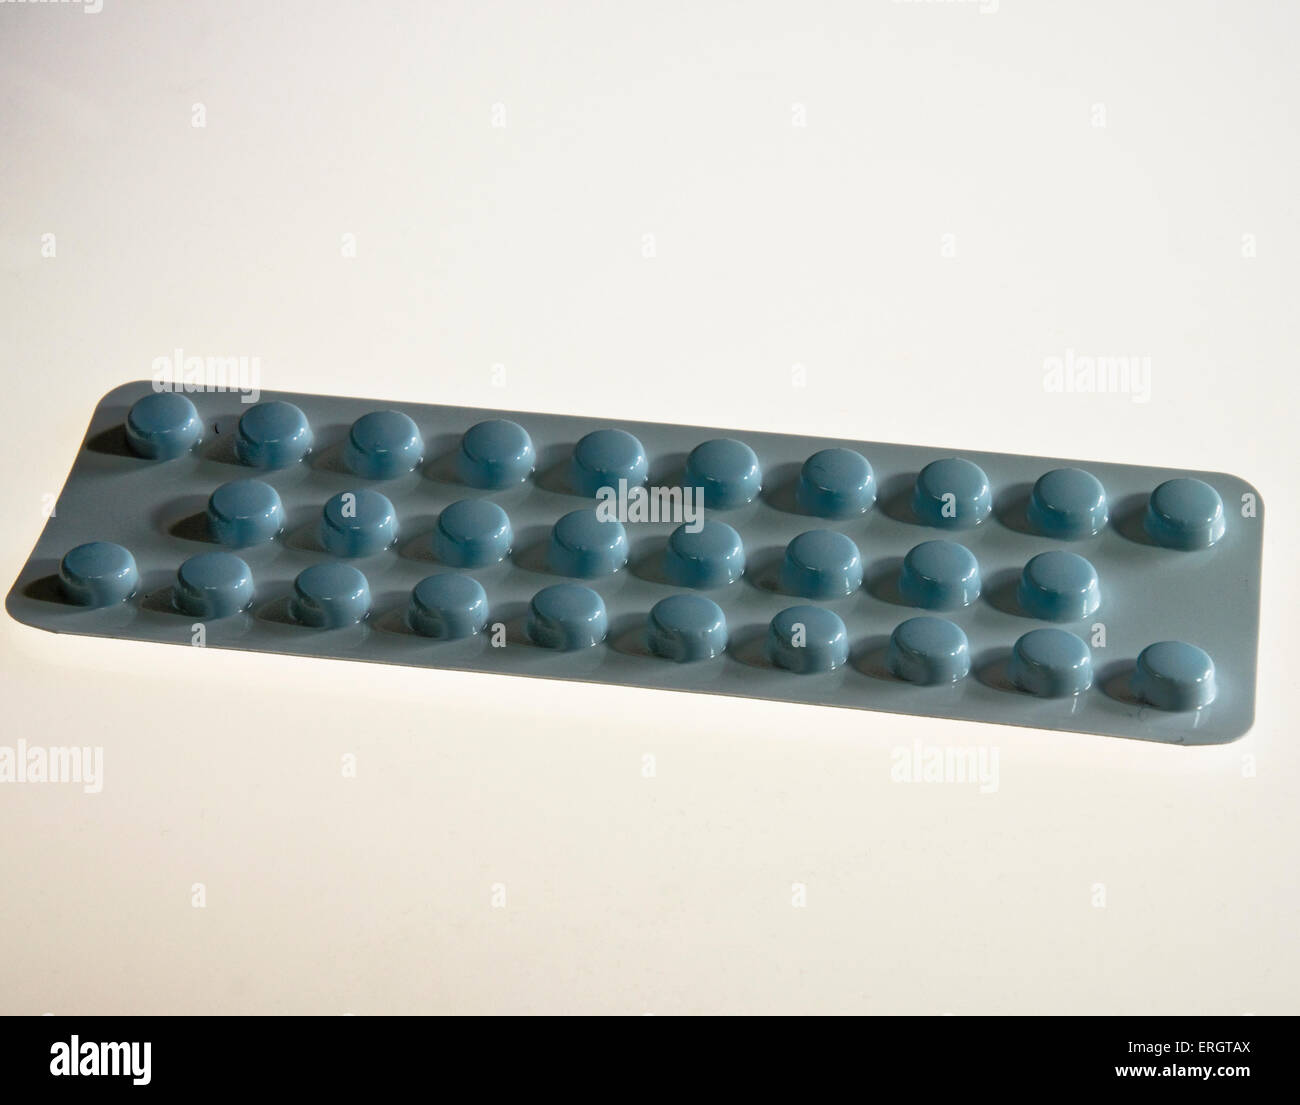 Amitriptyline 10mg Tablets Medication for back pain Stock Photo